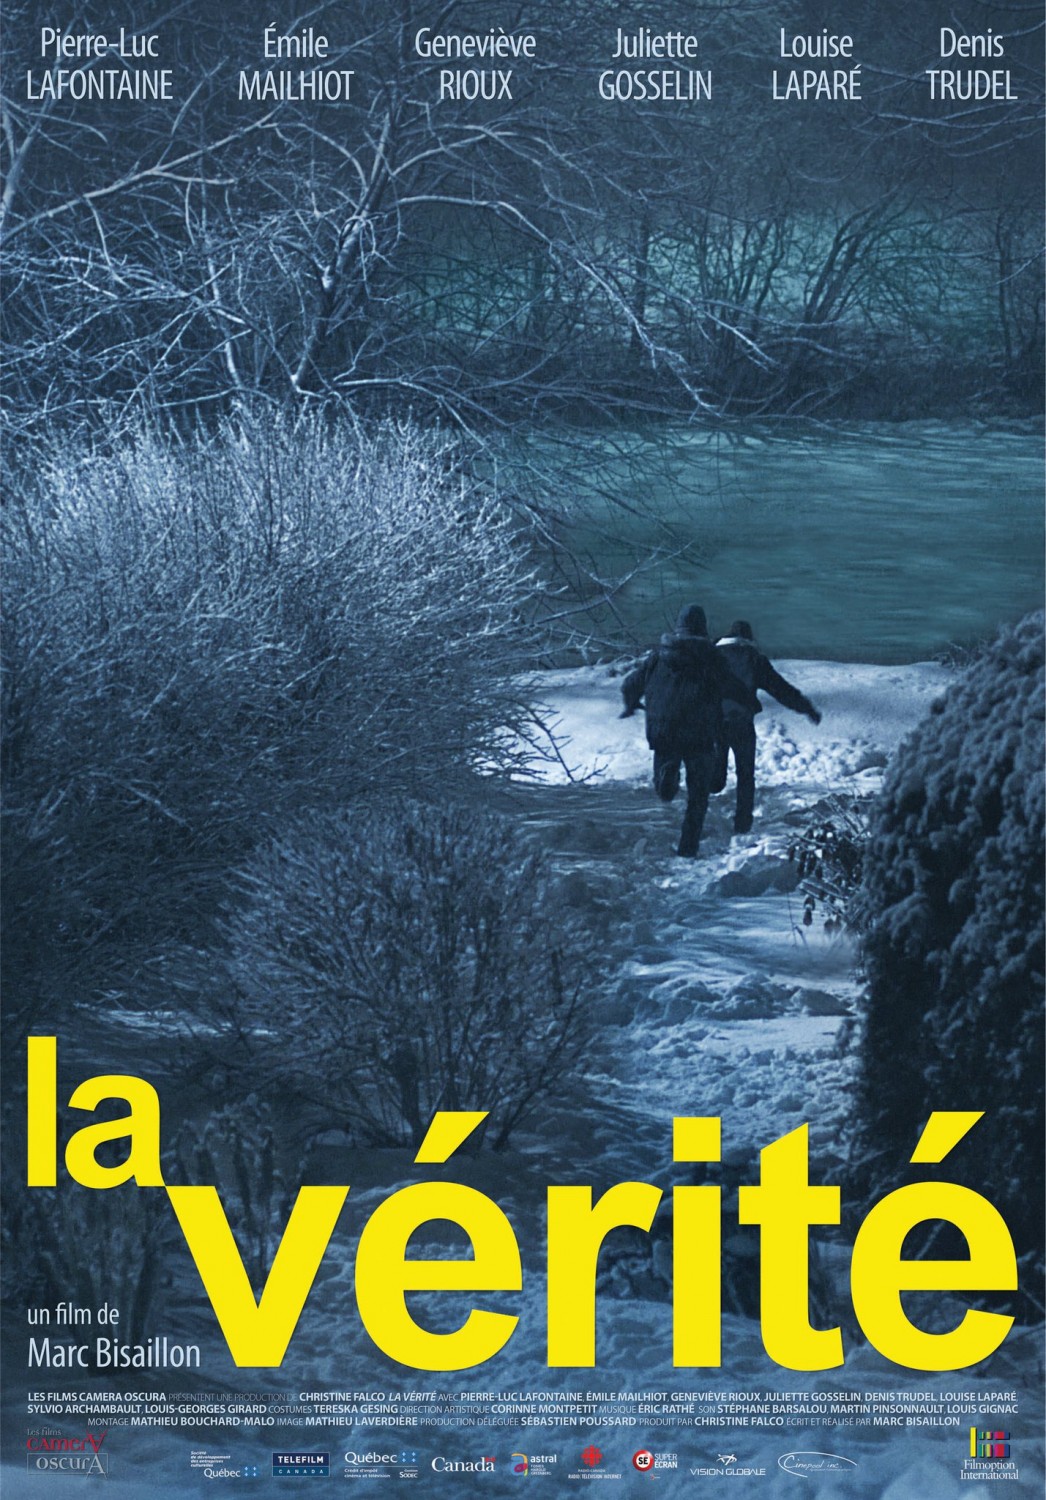 Extra Large Movie Poster Image for La vérité 